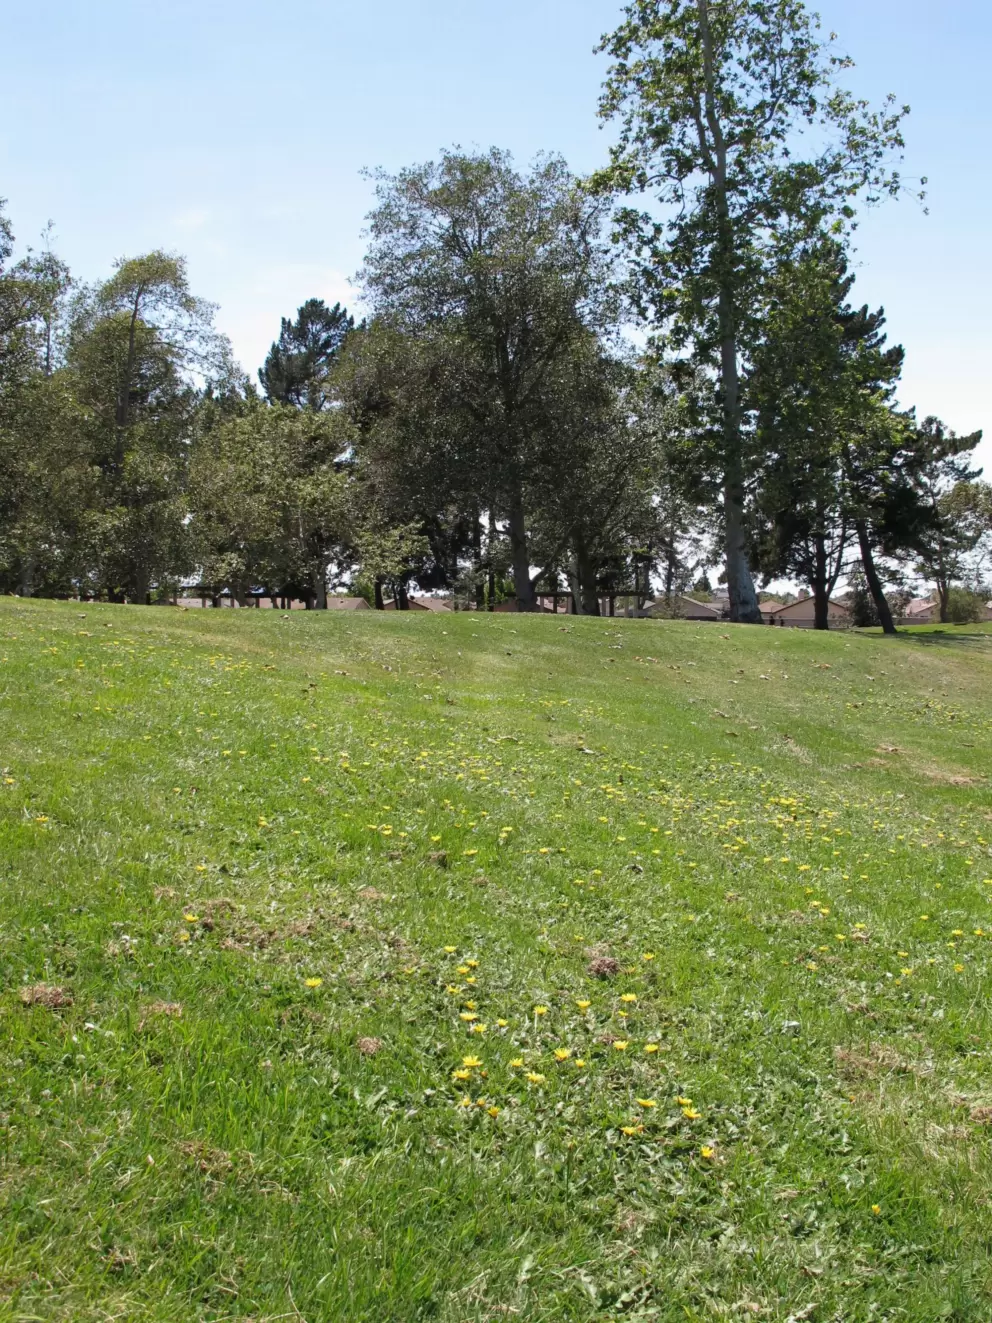 Preisker Park, Santa Maria